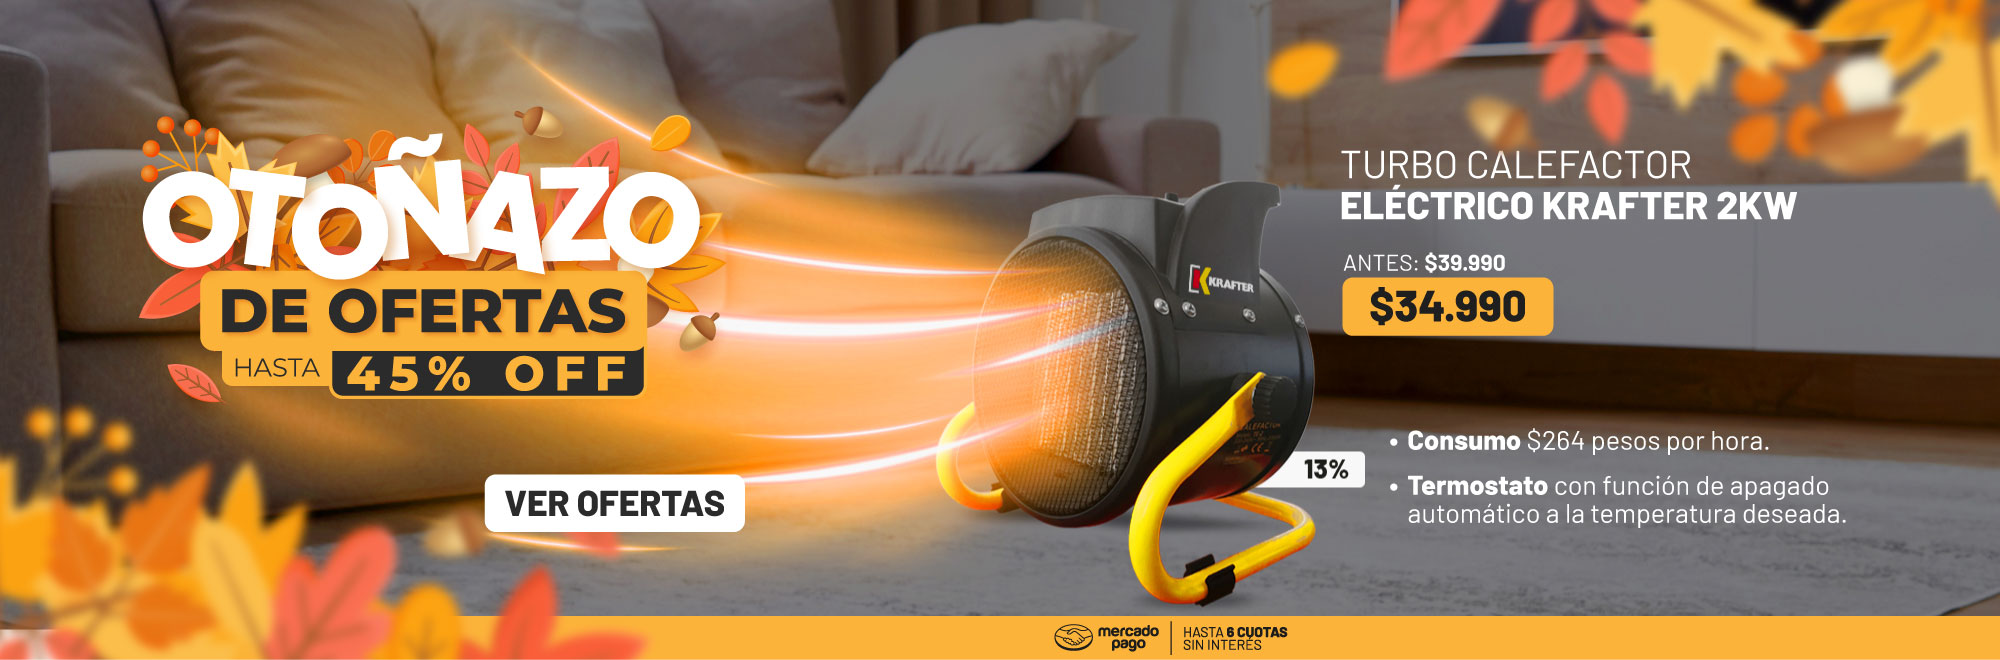 Ofertas Otoño Turbo Calefactores - Maktotal